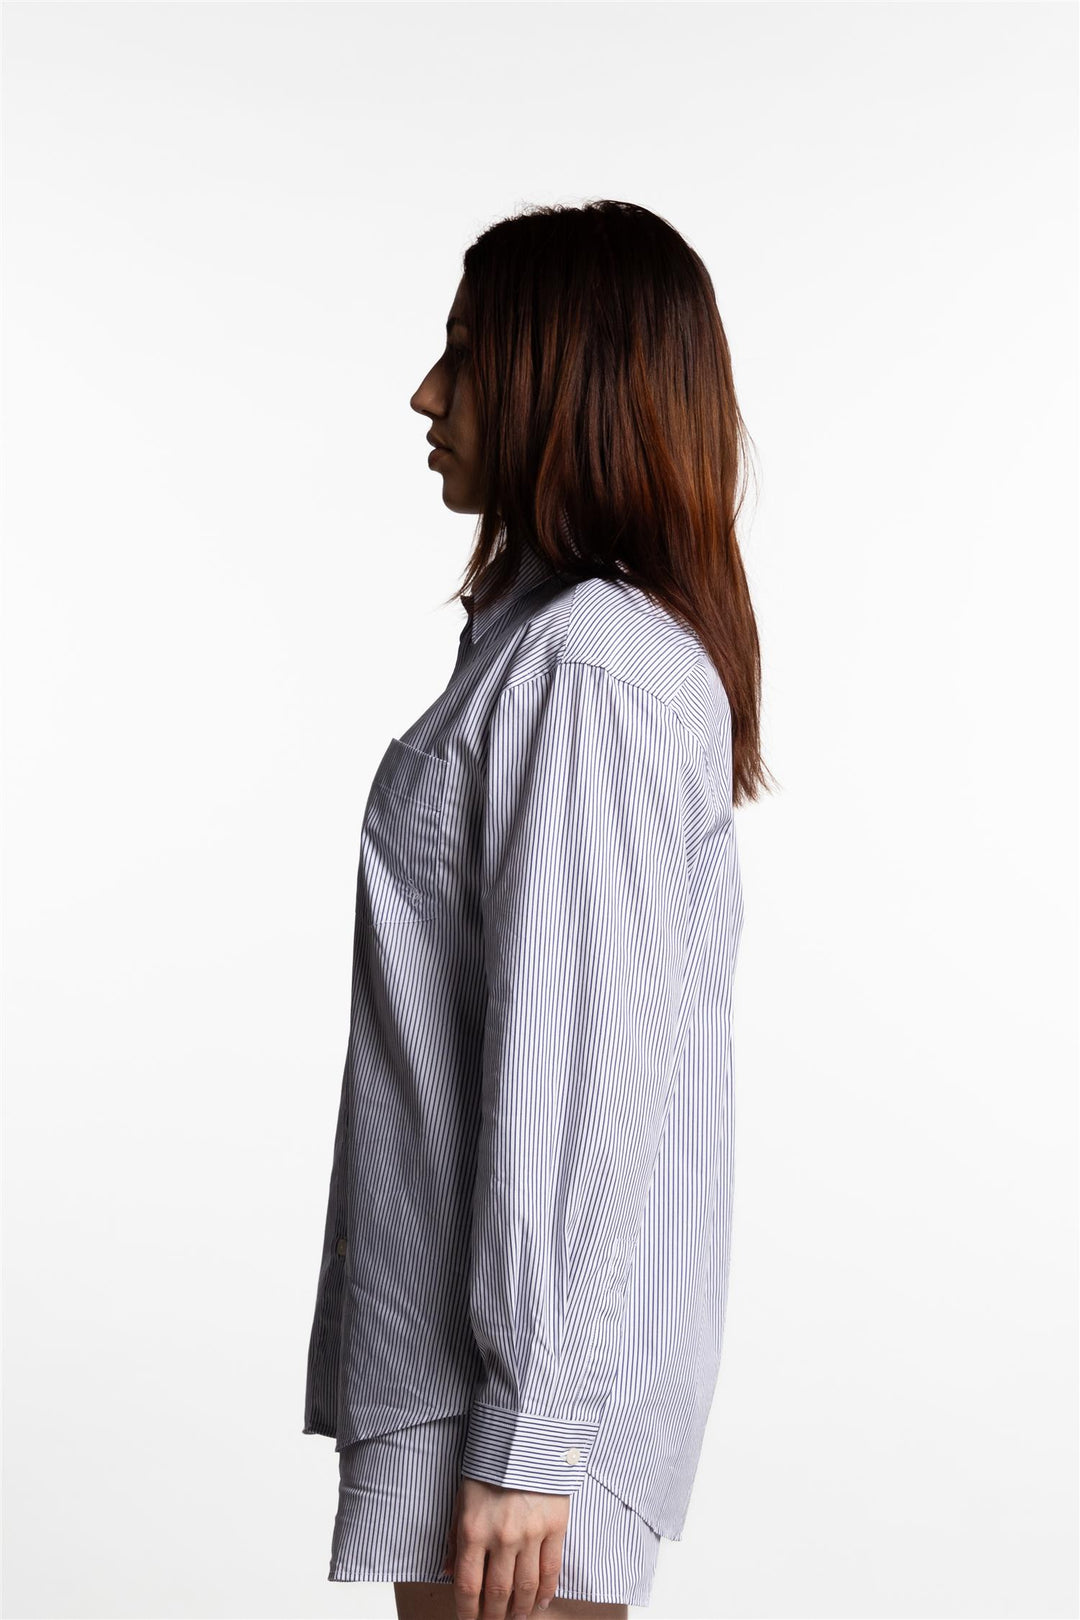 SRC Embroidered Oversized Shirt- White/Navy Thin Stripe/Navy